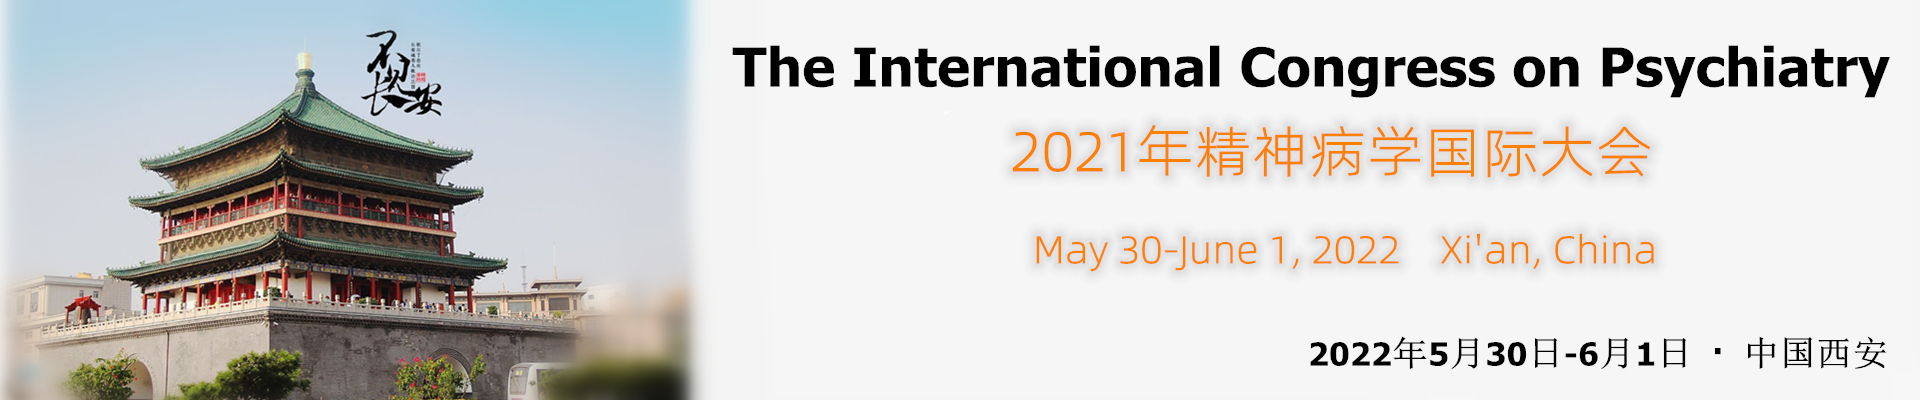 The International Congress on Psychiatry (CP 2022)